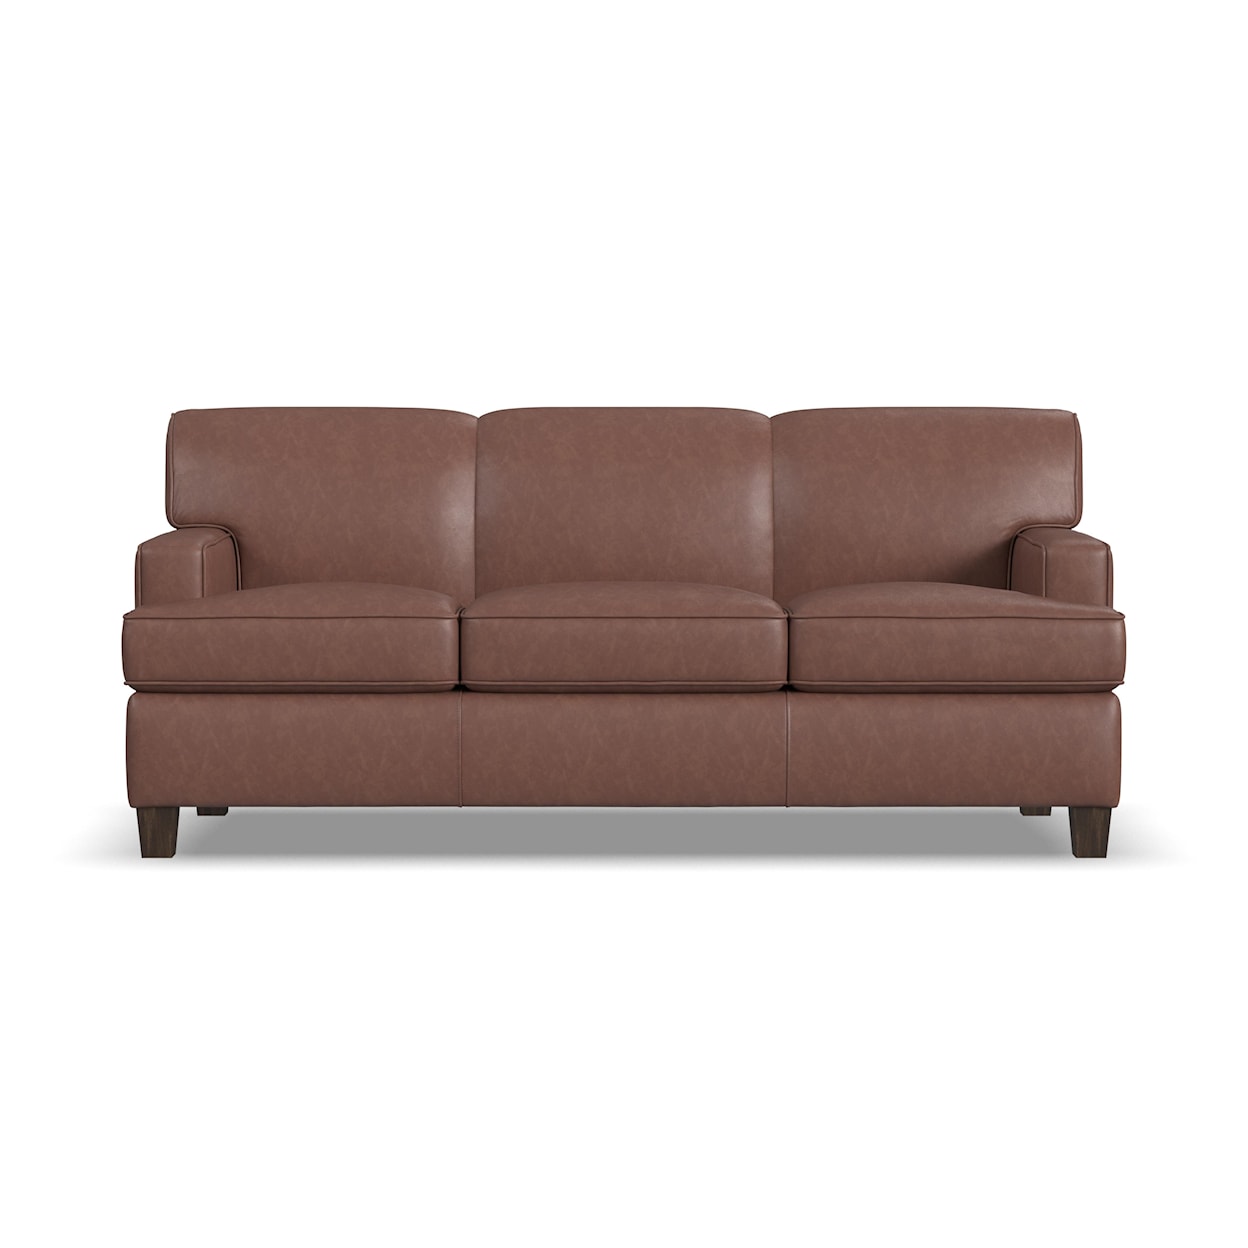 Flexsteel Dempsey Leather Sofa